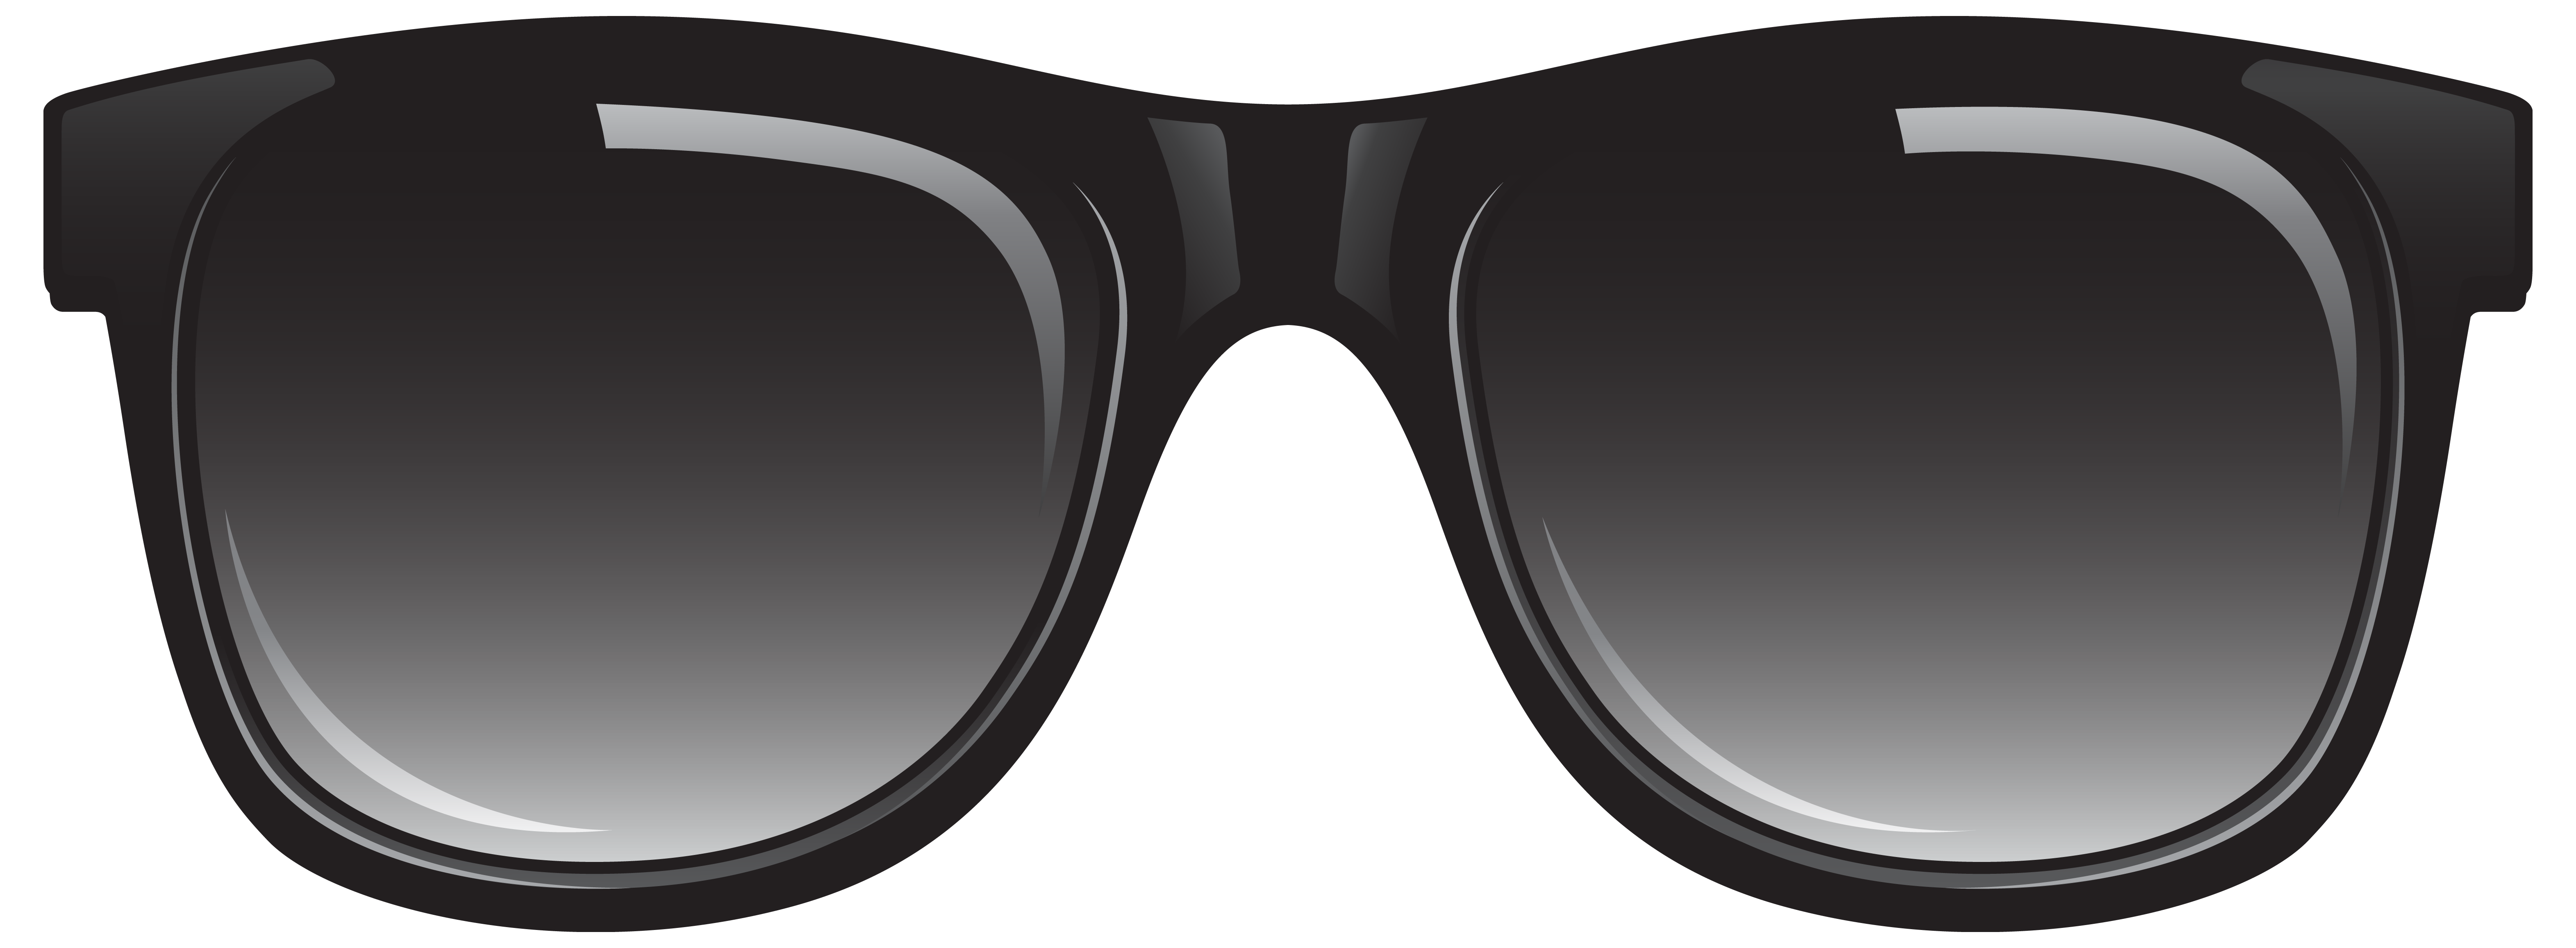 Sunglasses Frames Png Image - Sunglasses, Transparent background PNG HD thumbnail